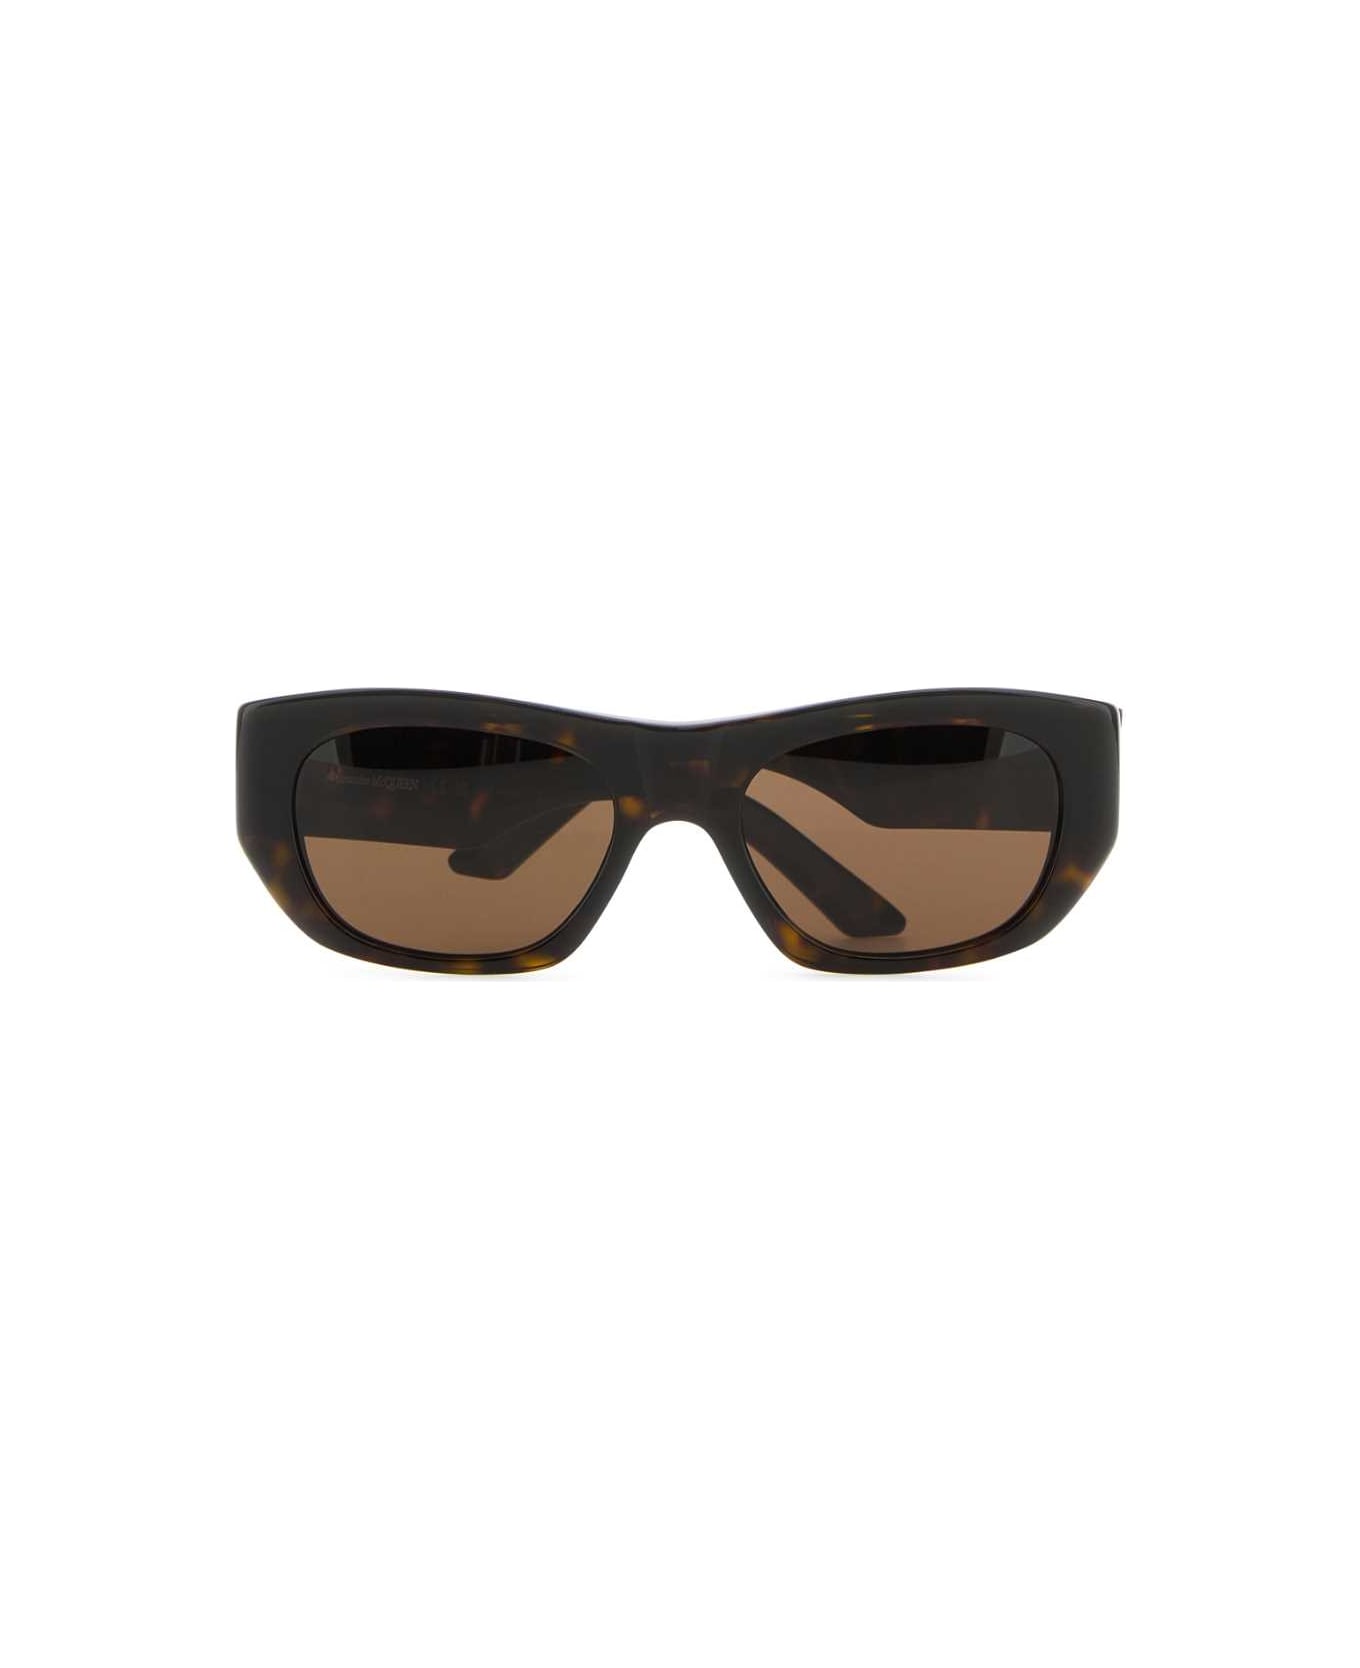 Alexander McQueen Printed Acetate Punk Rivet Sunglasses - SOLIDBROWN サングラス